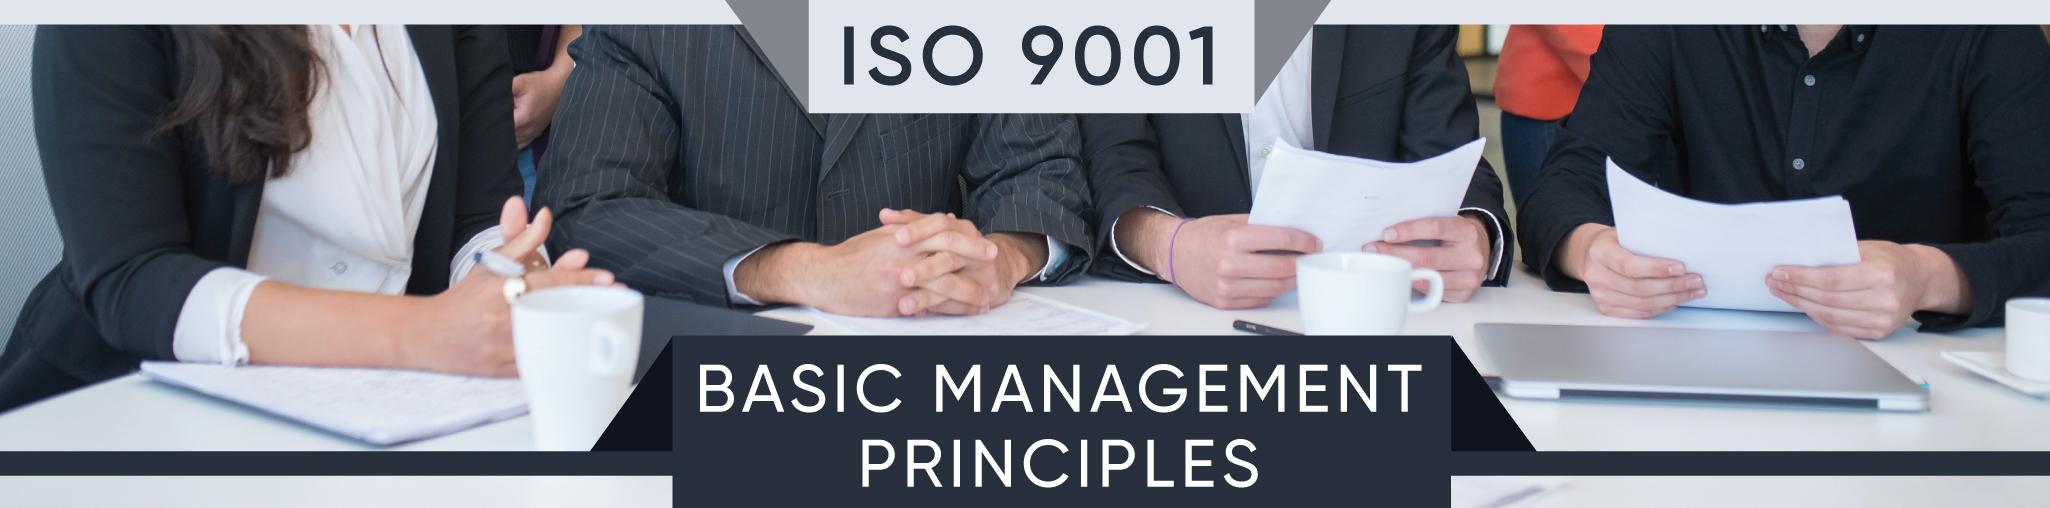 ISO 9001 Basic Management Principles